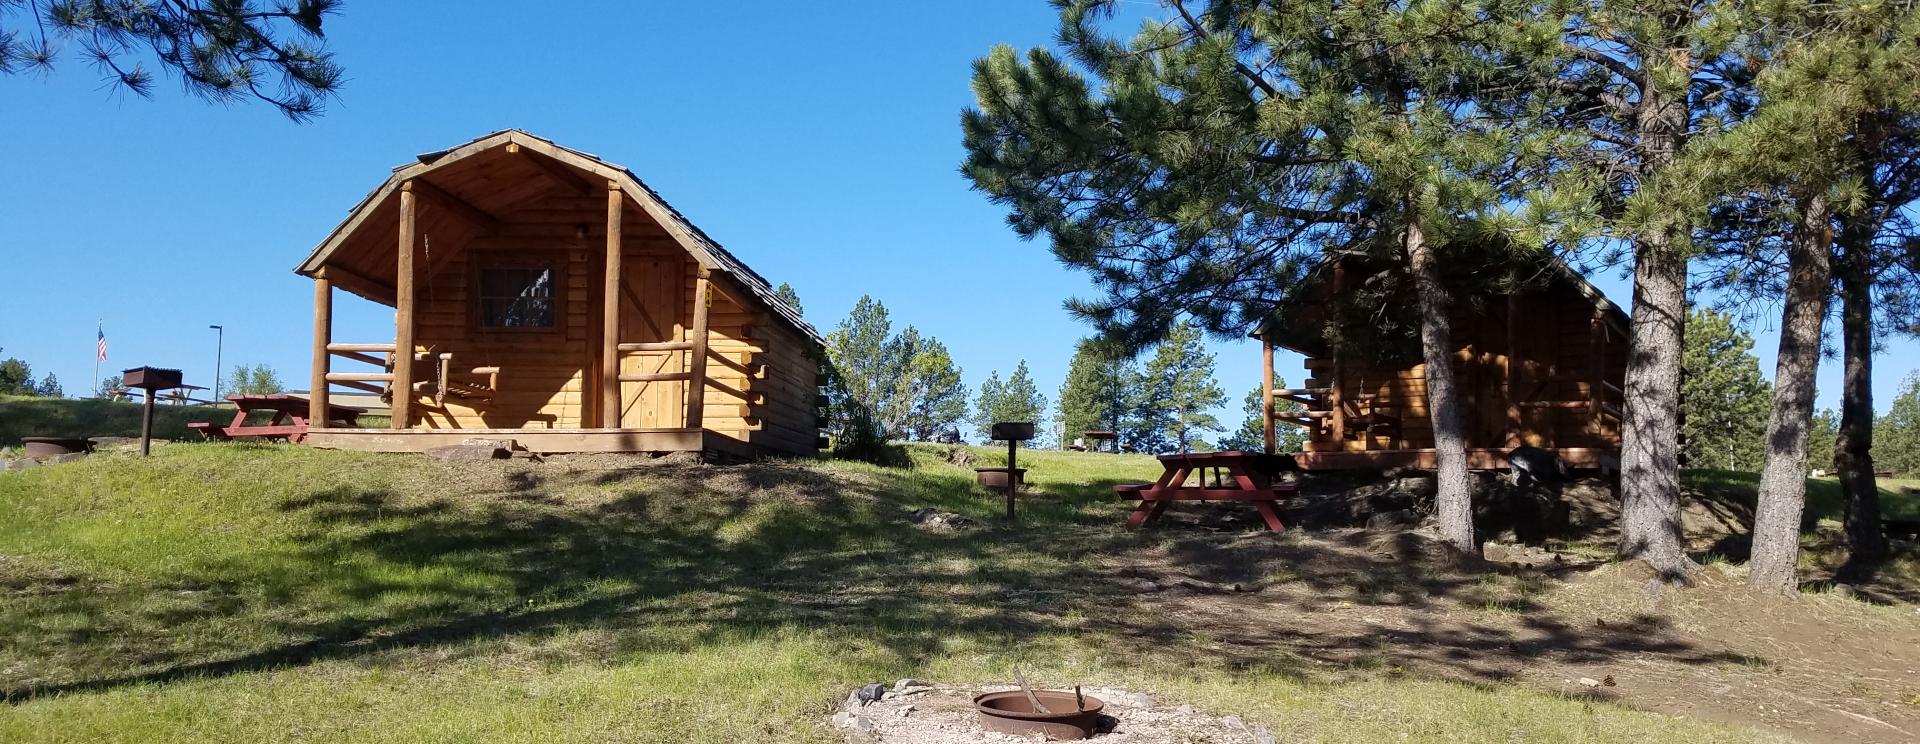 Custer Crazy Horse Campground